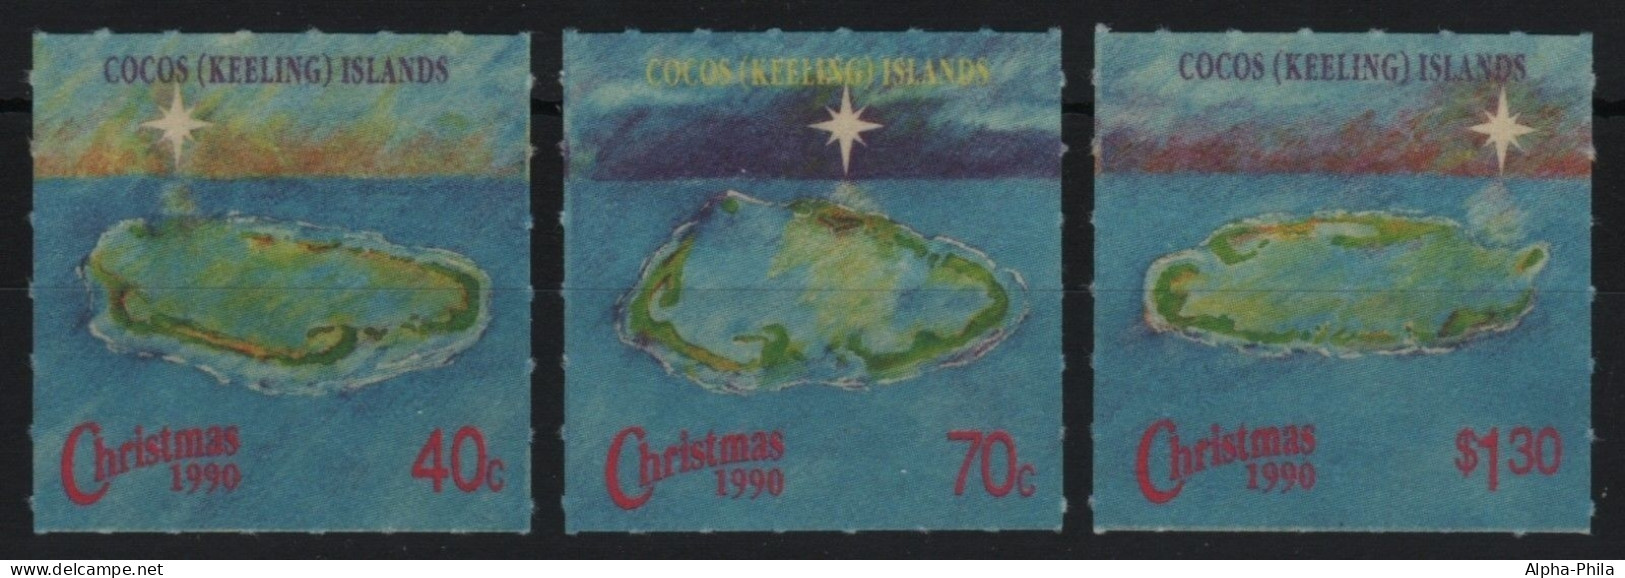 Kokos-Inseln 1990 - Mi-Nr. 237-239 ** - MNH - Weihnachten / X-mas - Cocos (Keeling) Islands